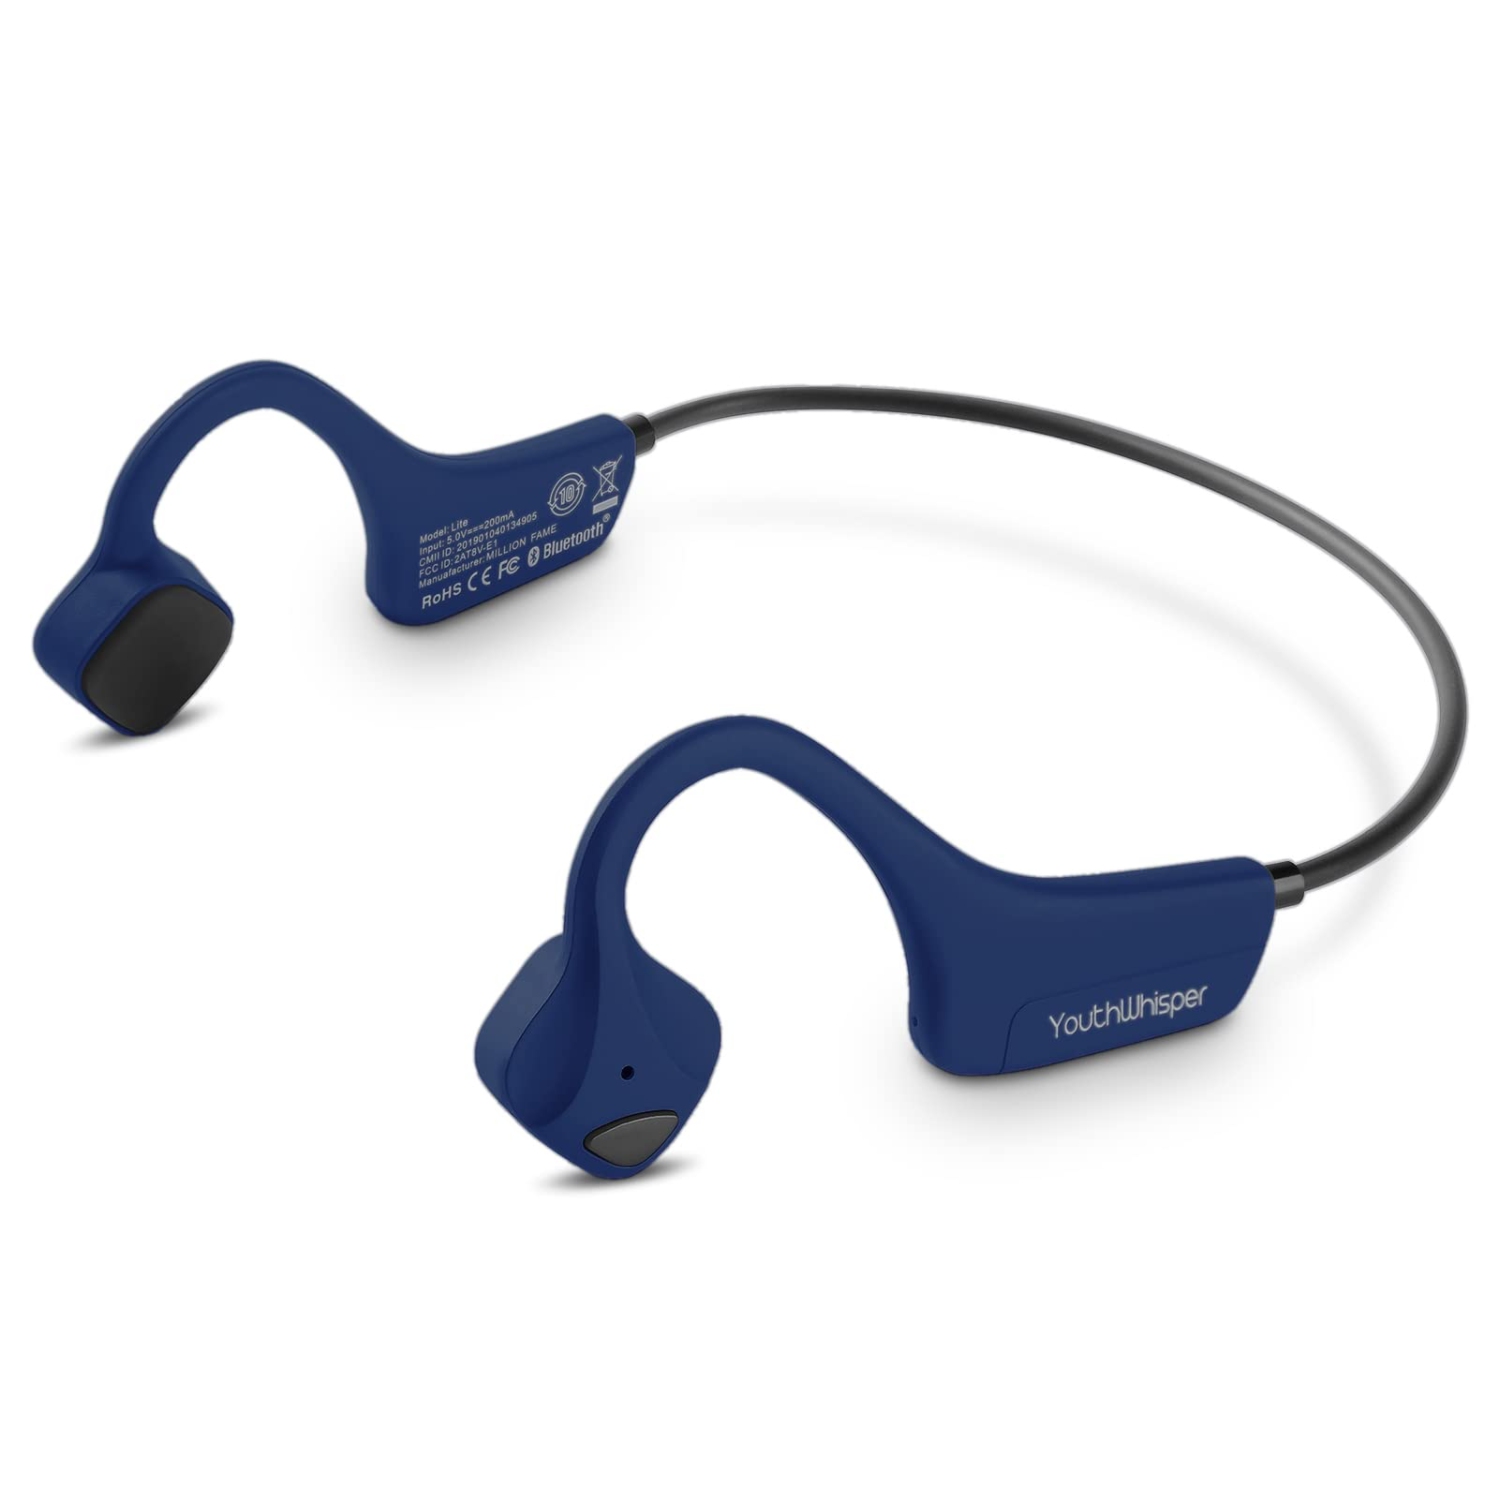 Bone Conduction Headphones Bluetooth - Open-Ear Wireless Headset, Sweat-Proof Earbuds for Running Jogging Workout Audio Book…